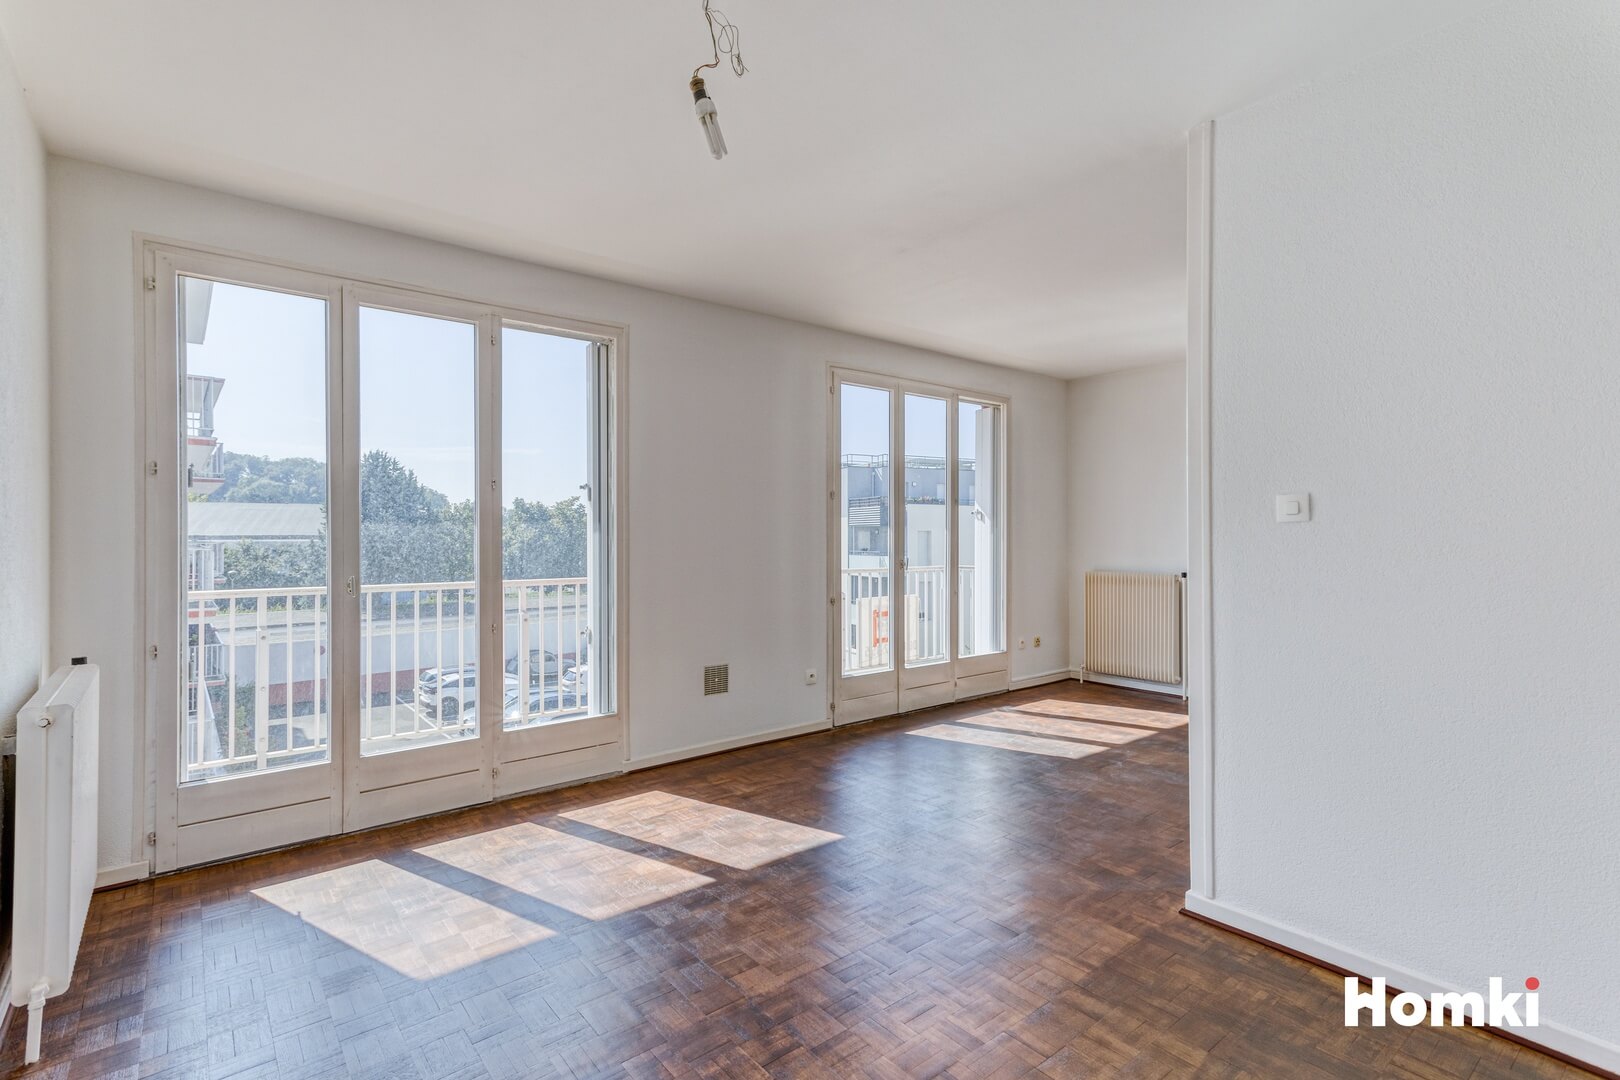 Homki - Vente Appartement  de 56.0 m² à Meyzieu 69330